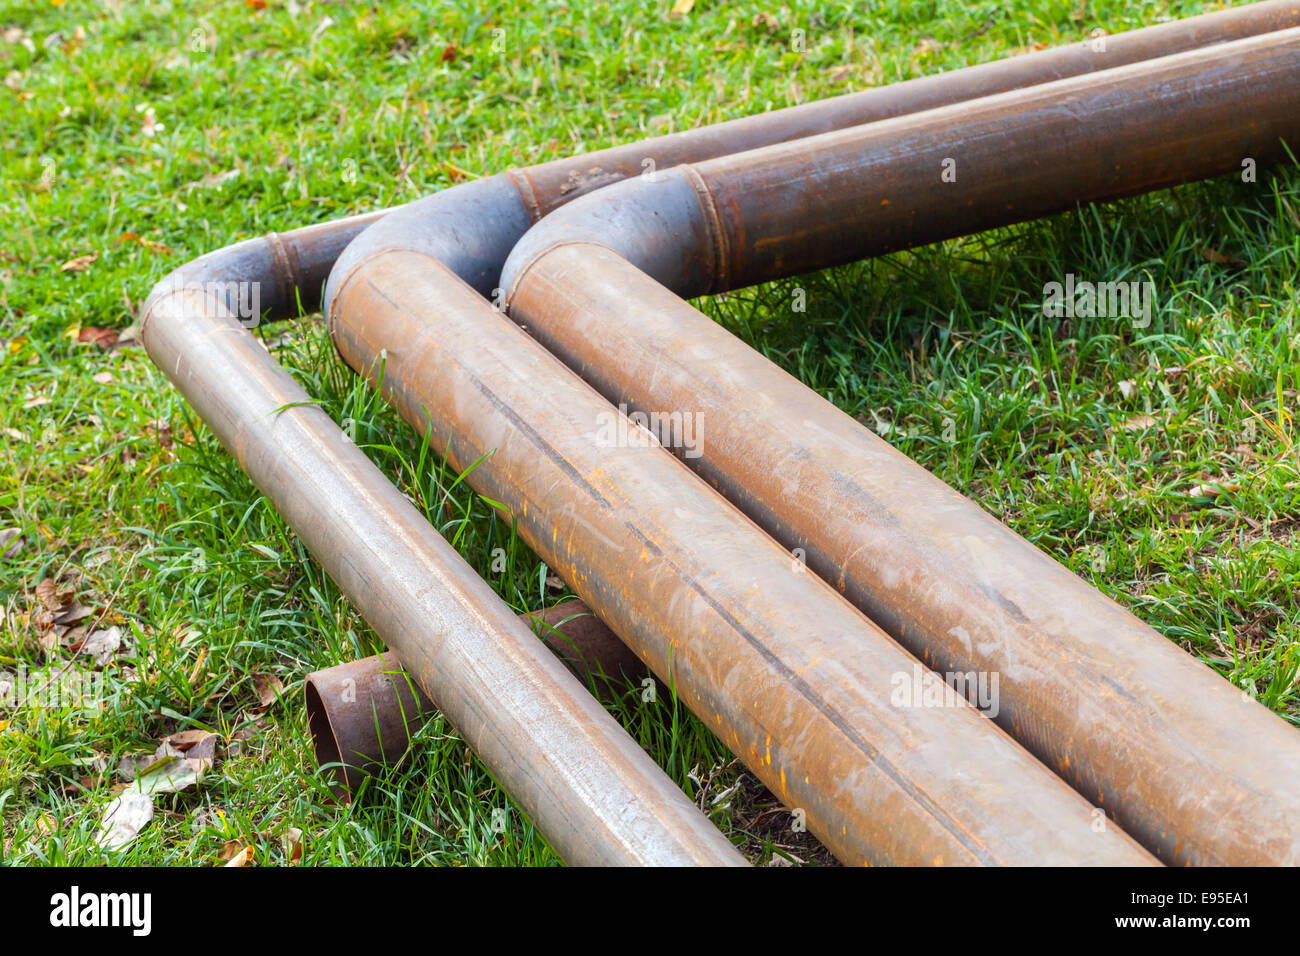 Piegare di industriali acciaio outdoor gasdotto su erba verde Foto Stock